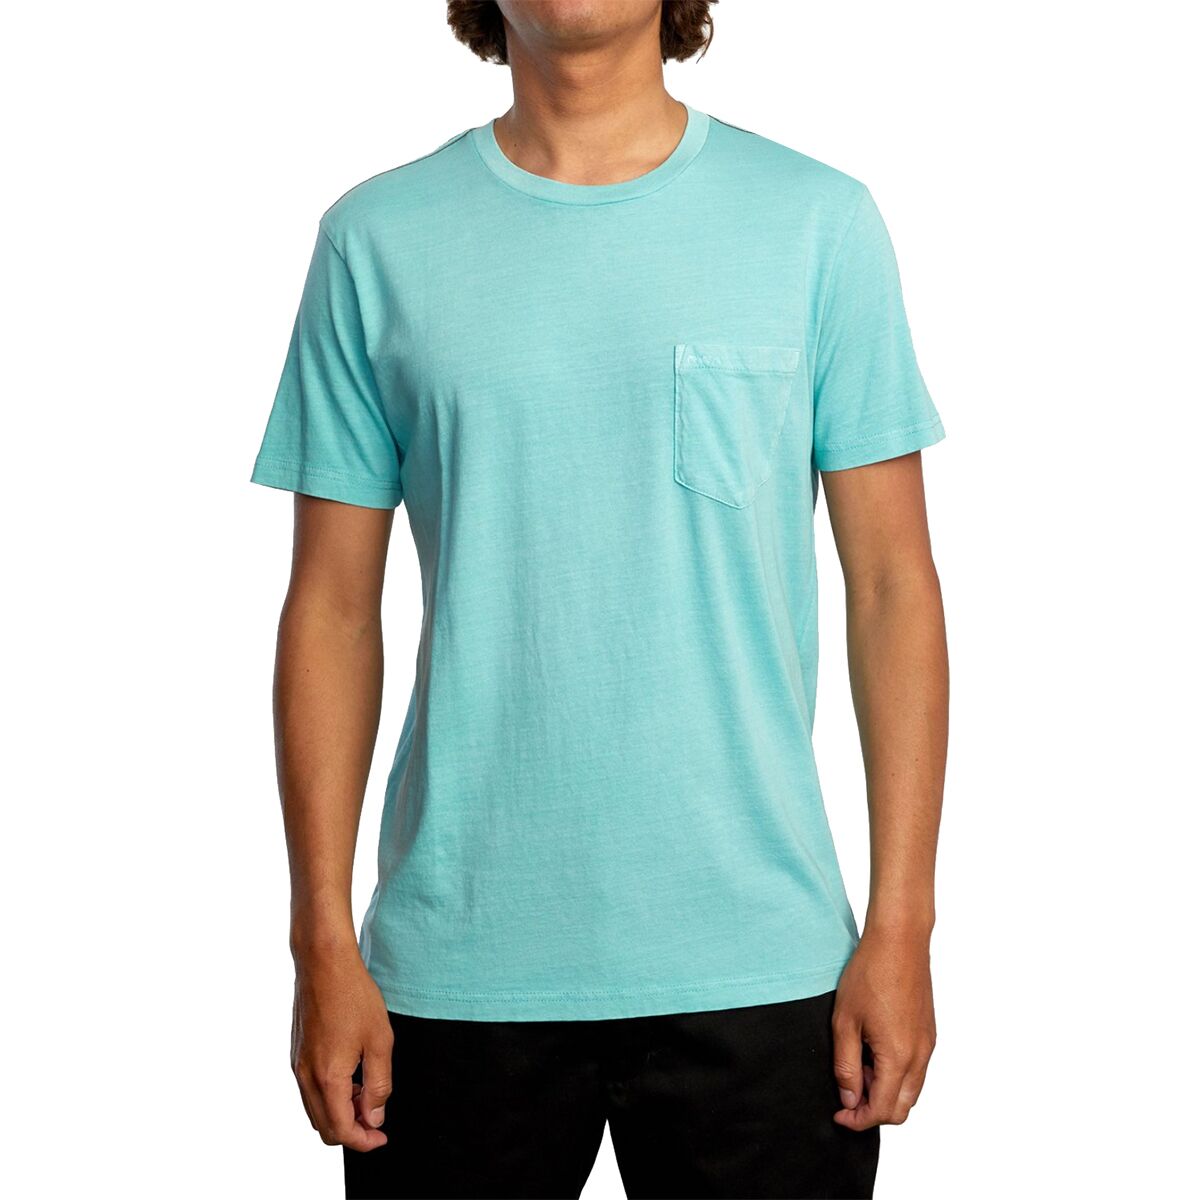 PTC 2 Pigment T-Shirt - Men